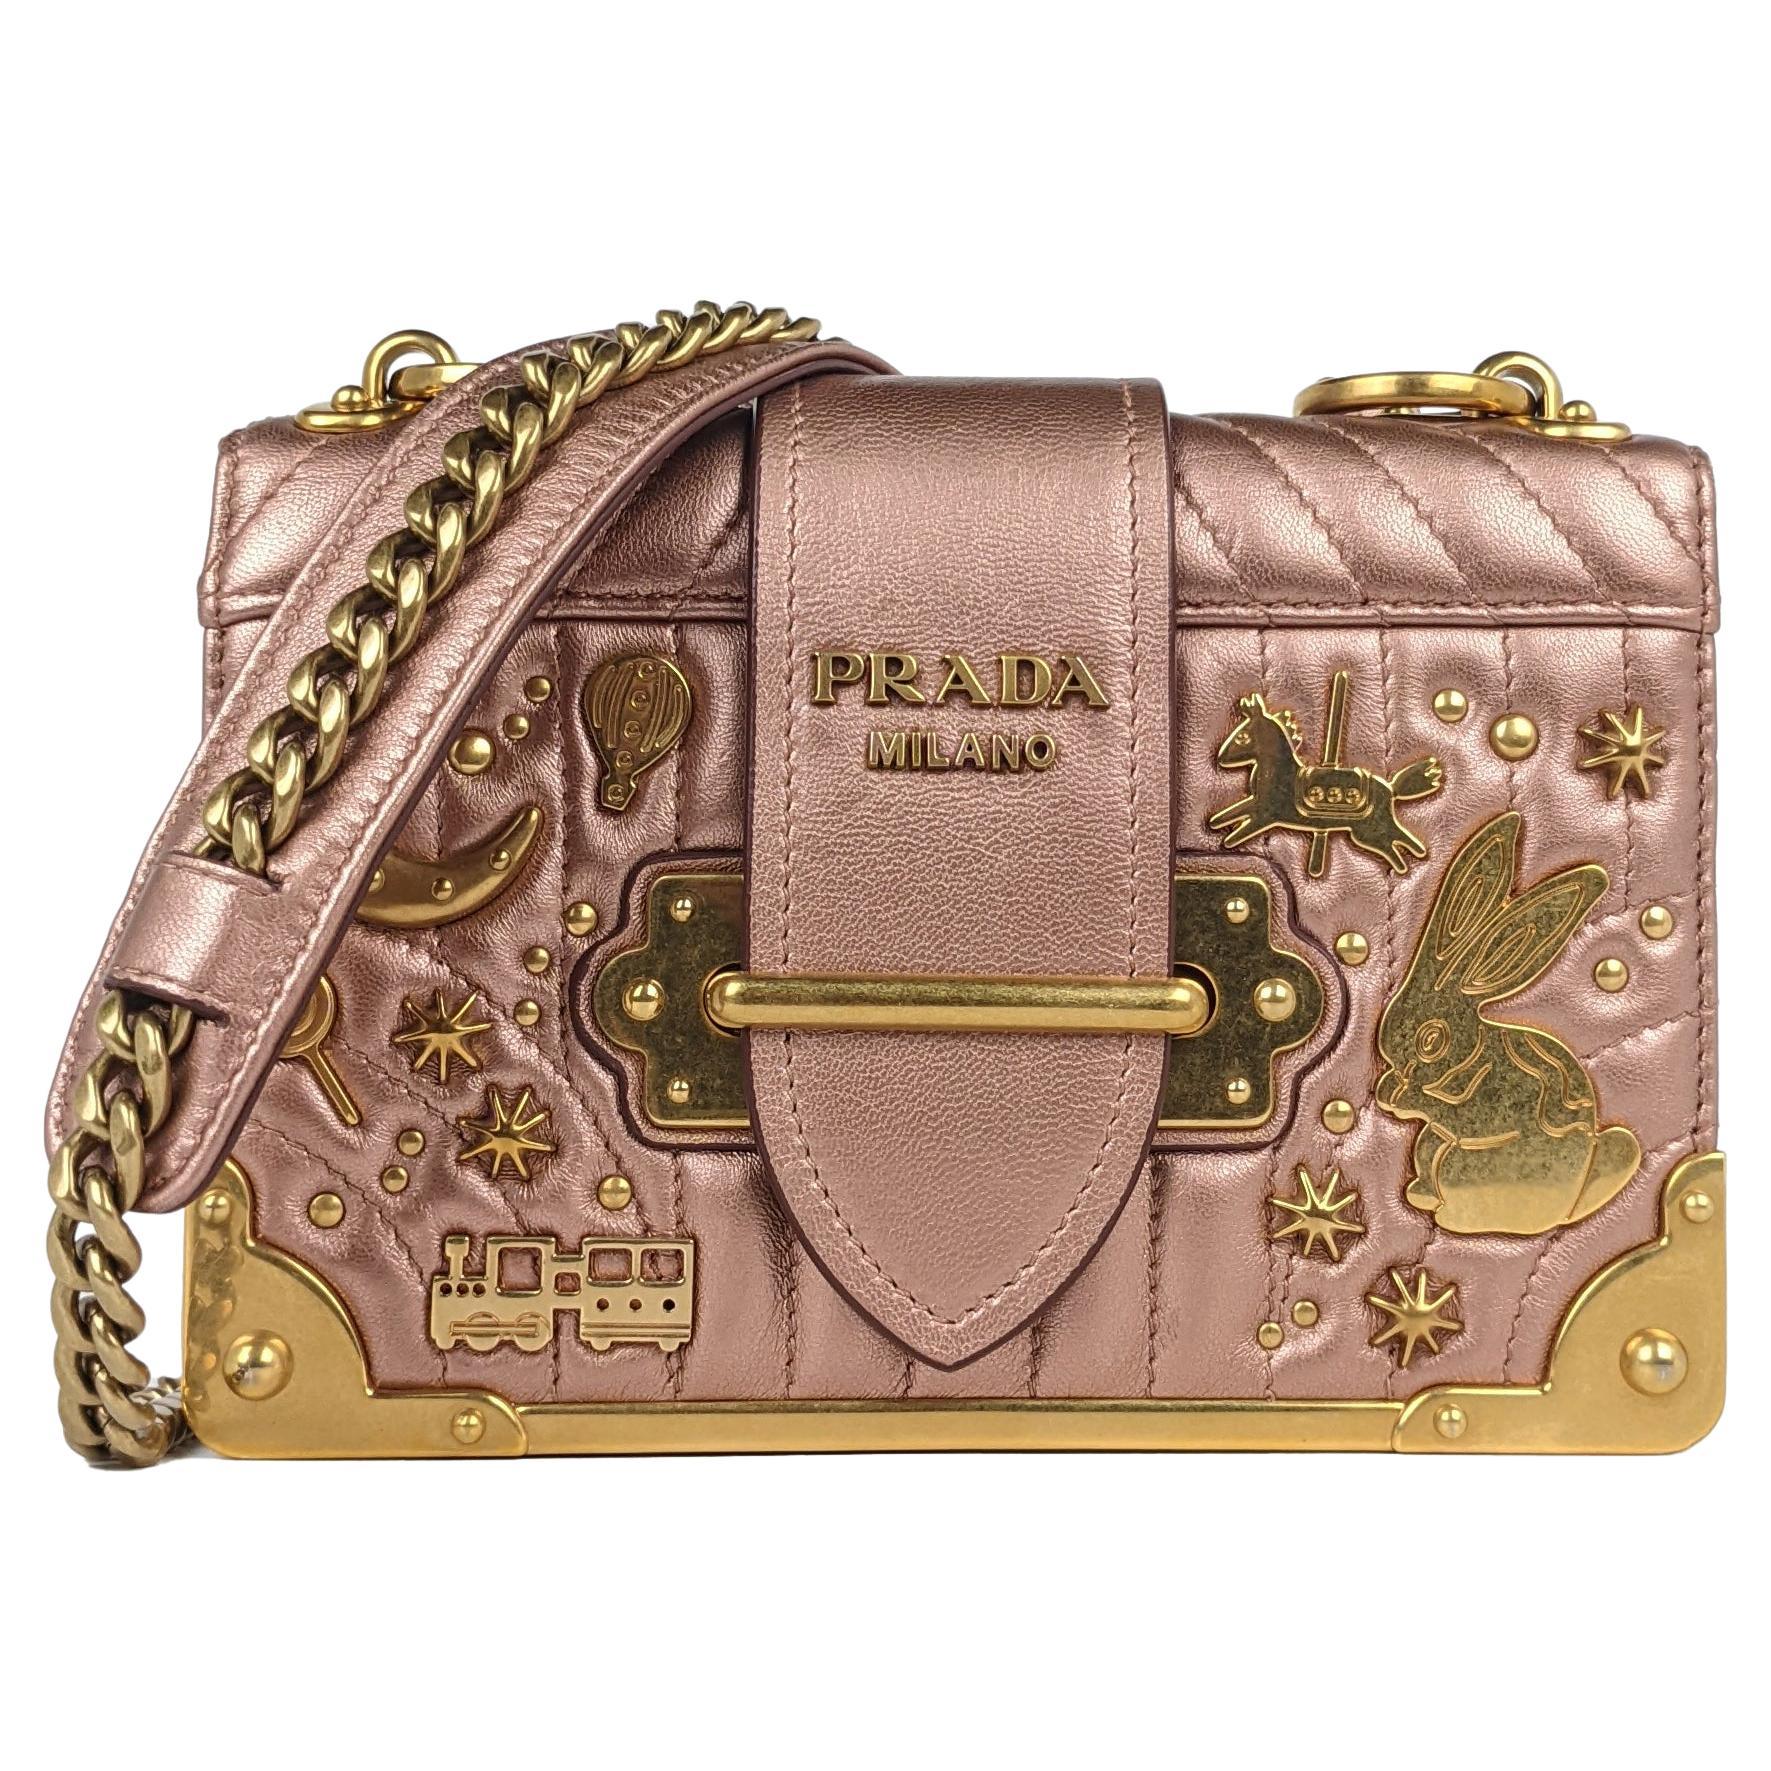 Prada Cahier Antico Mordo Stud Small Pink Gold Leather Cross Body Bag